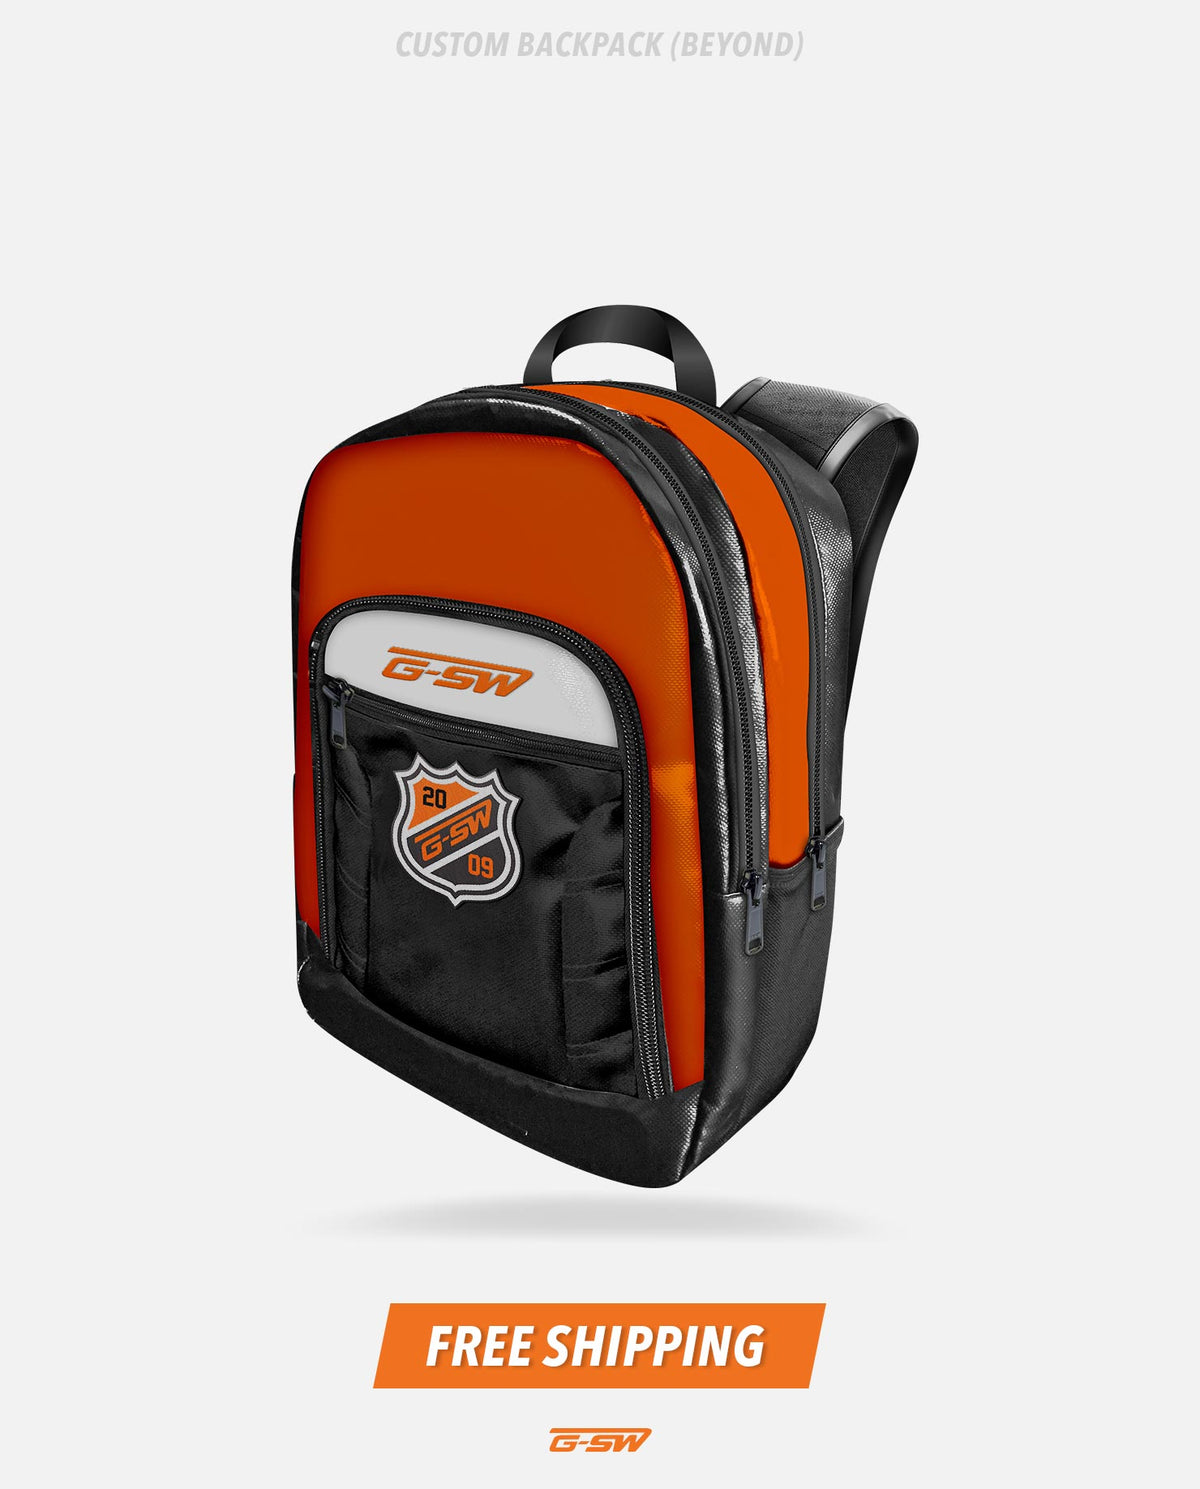 GSW Custom Backpack (Beyond)